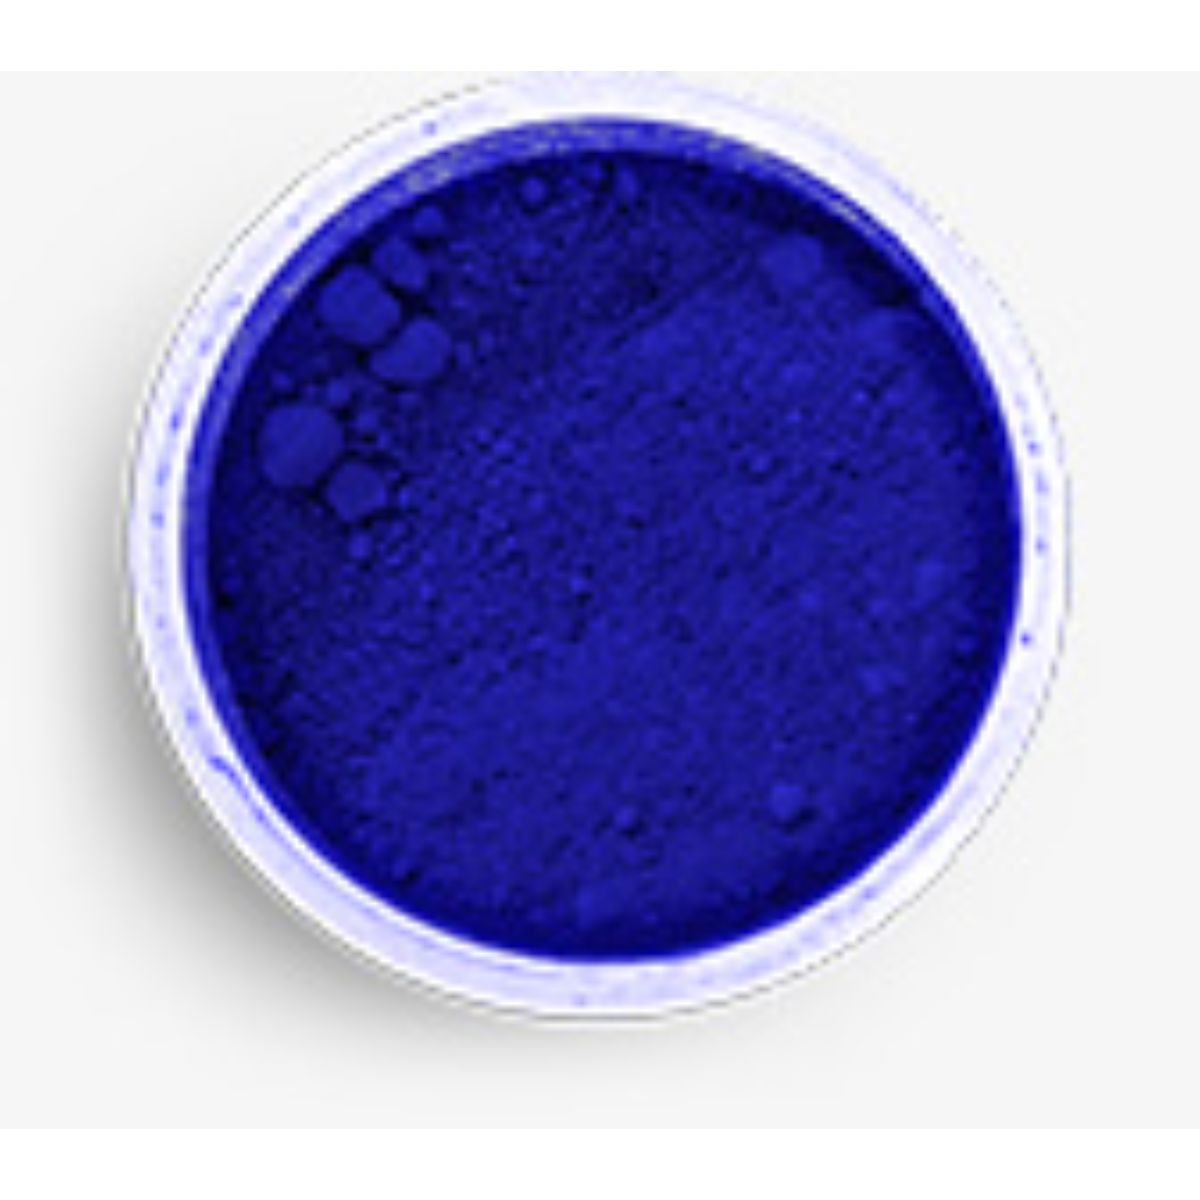 Colorant alimentaire hydrosoluble Bleu - Roxy & Rich